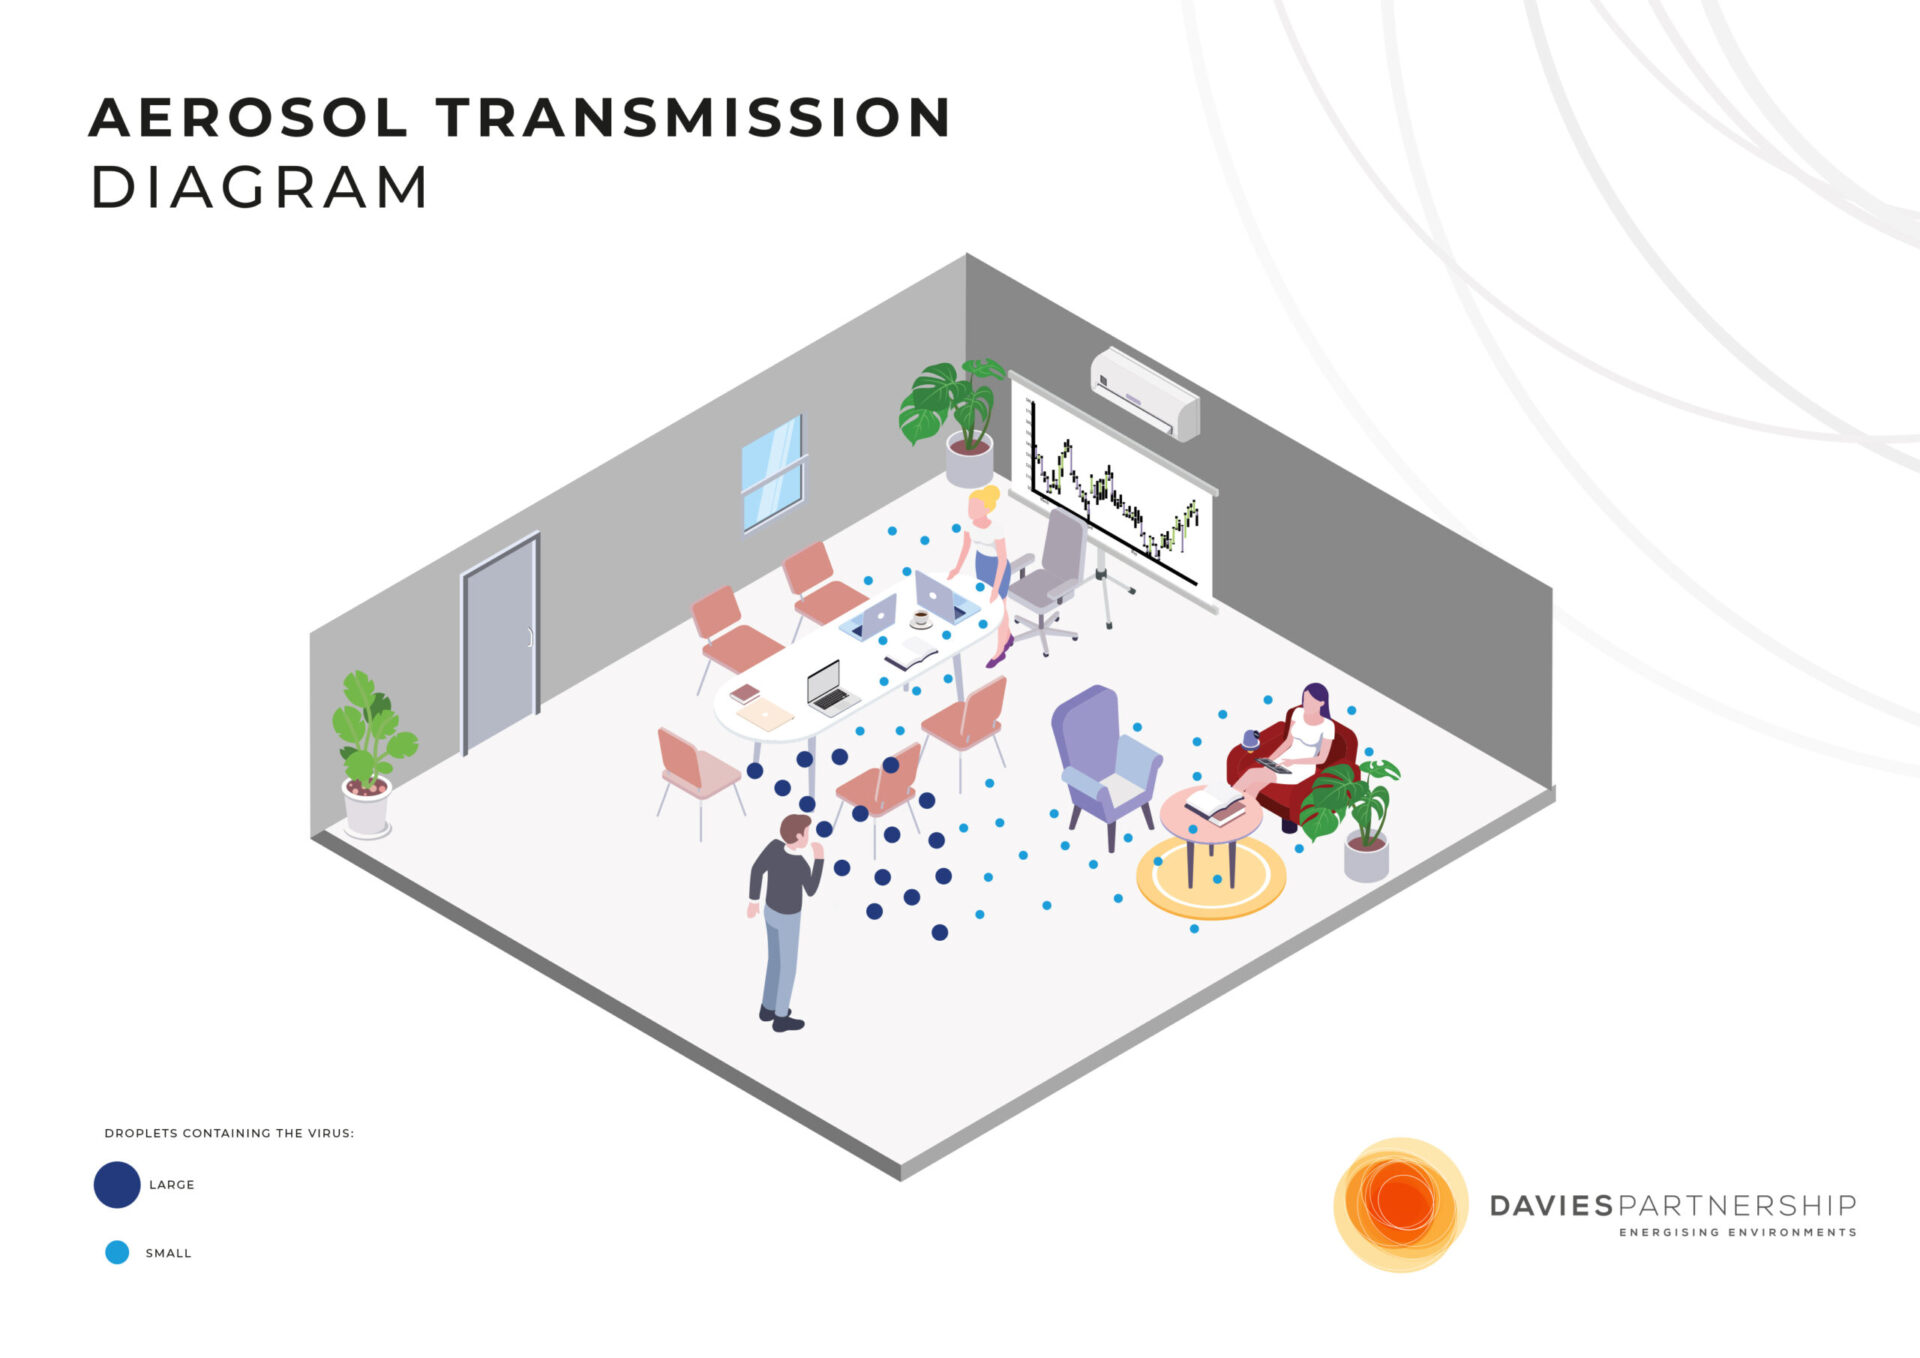 Aerosol Transmission Graphic Davies Partnership